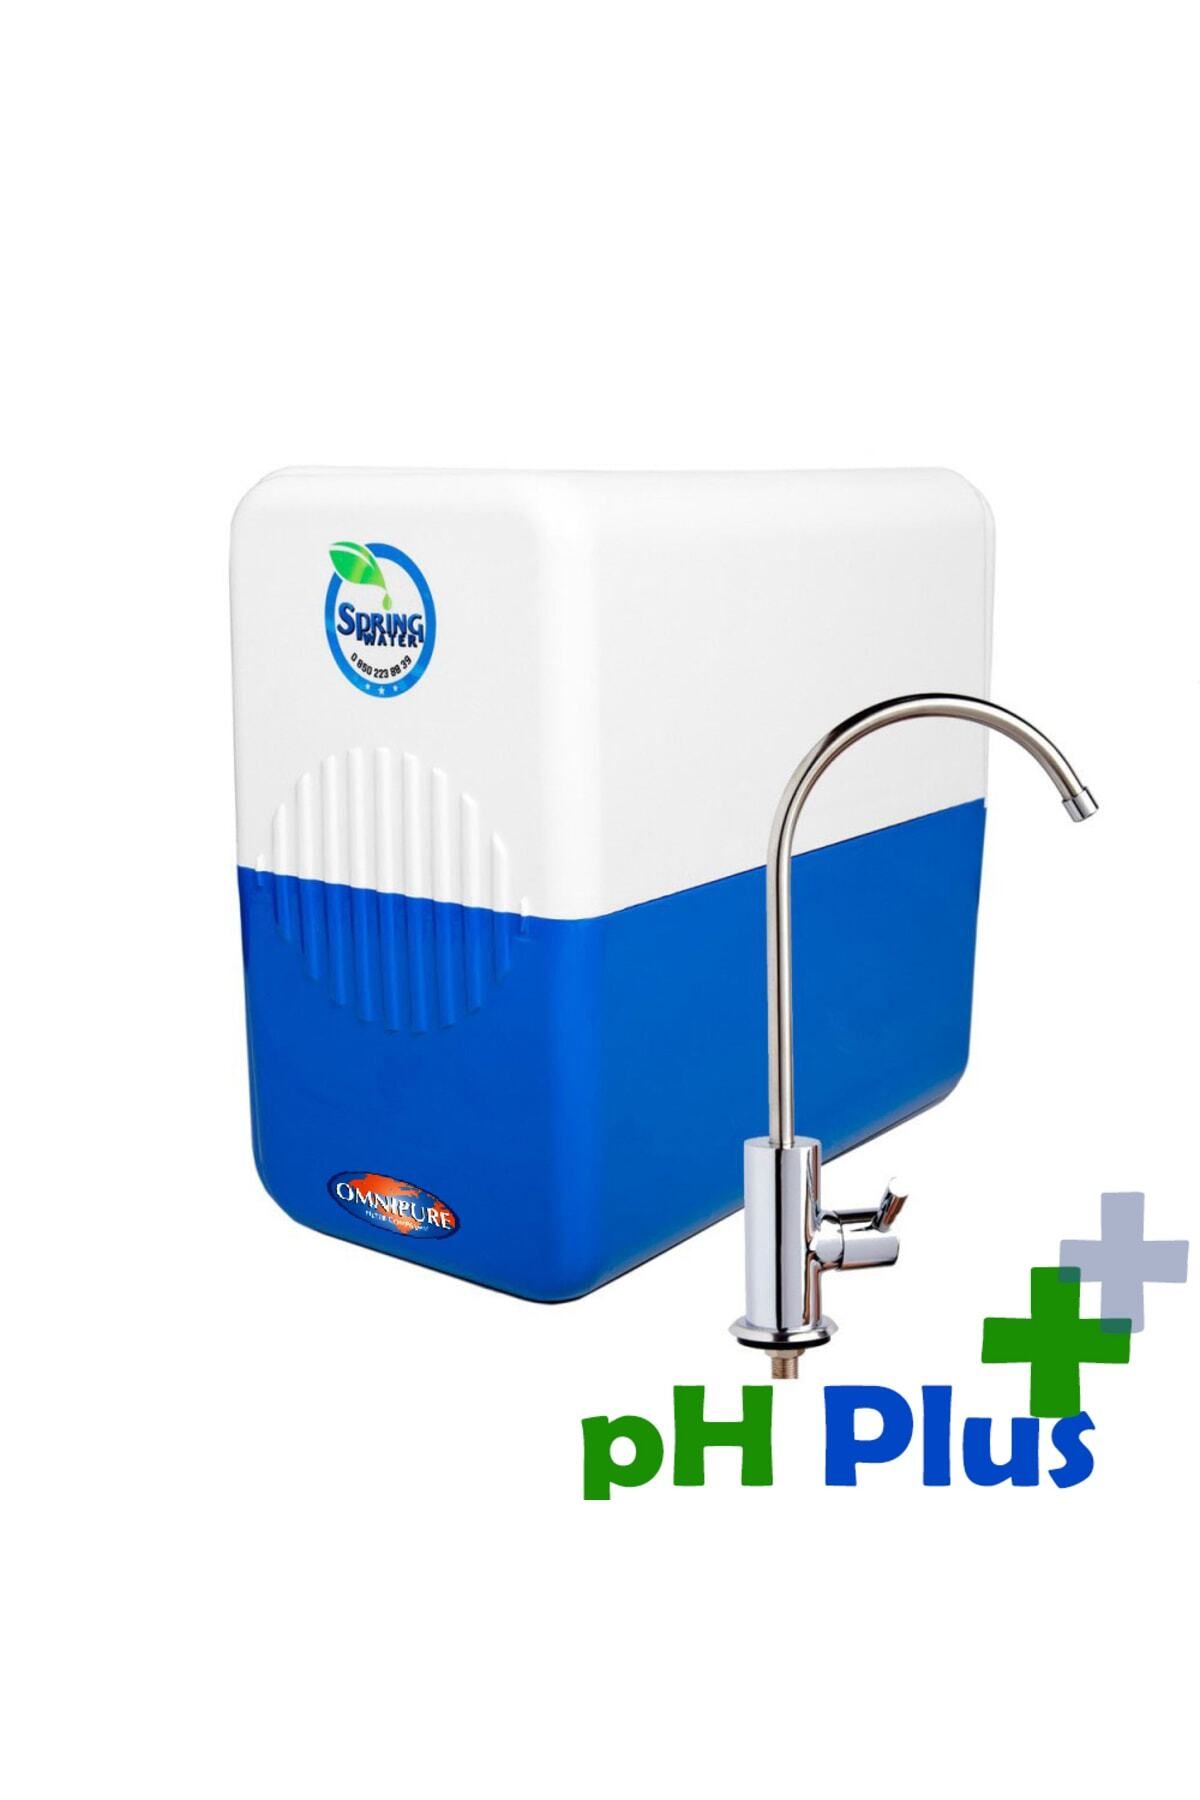 Spring Water Usa Omnipure Teknoloji Ph Plus Alkali Su Arıtma Cihazı